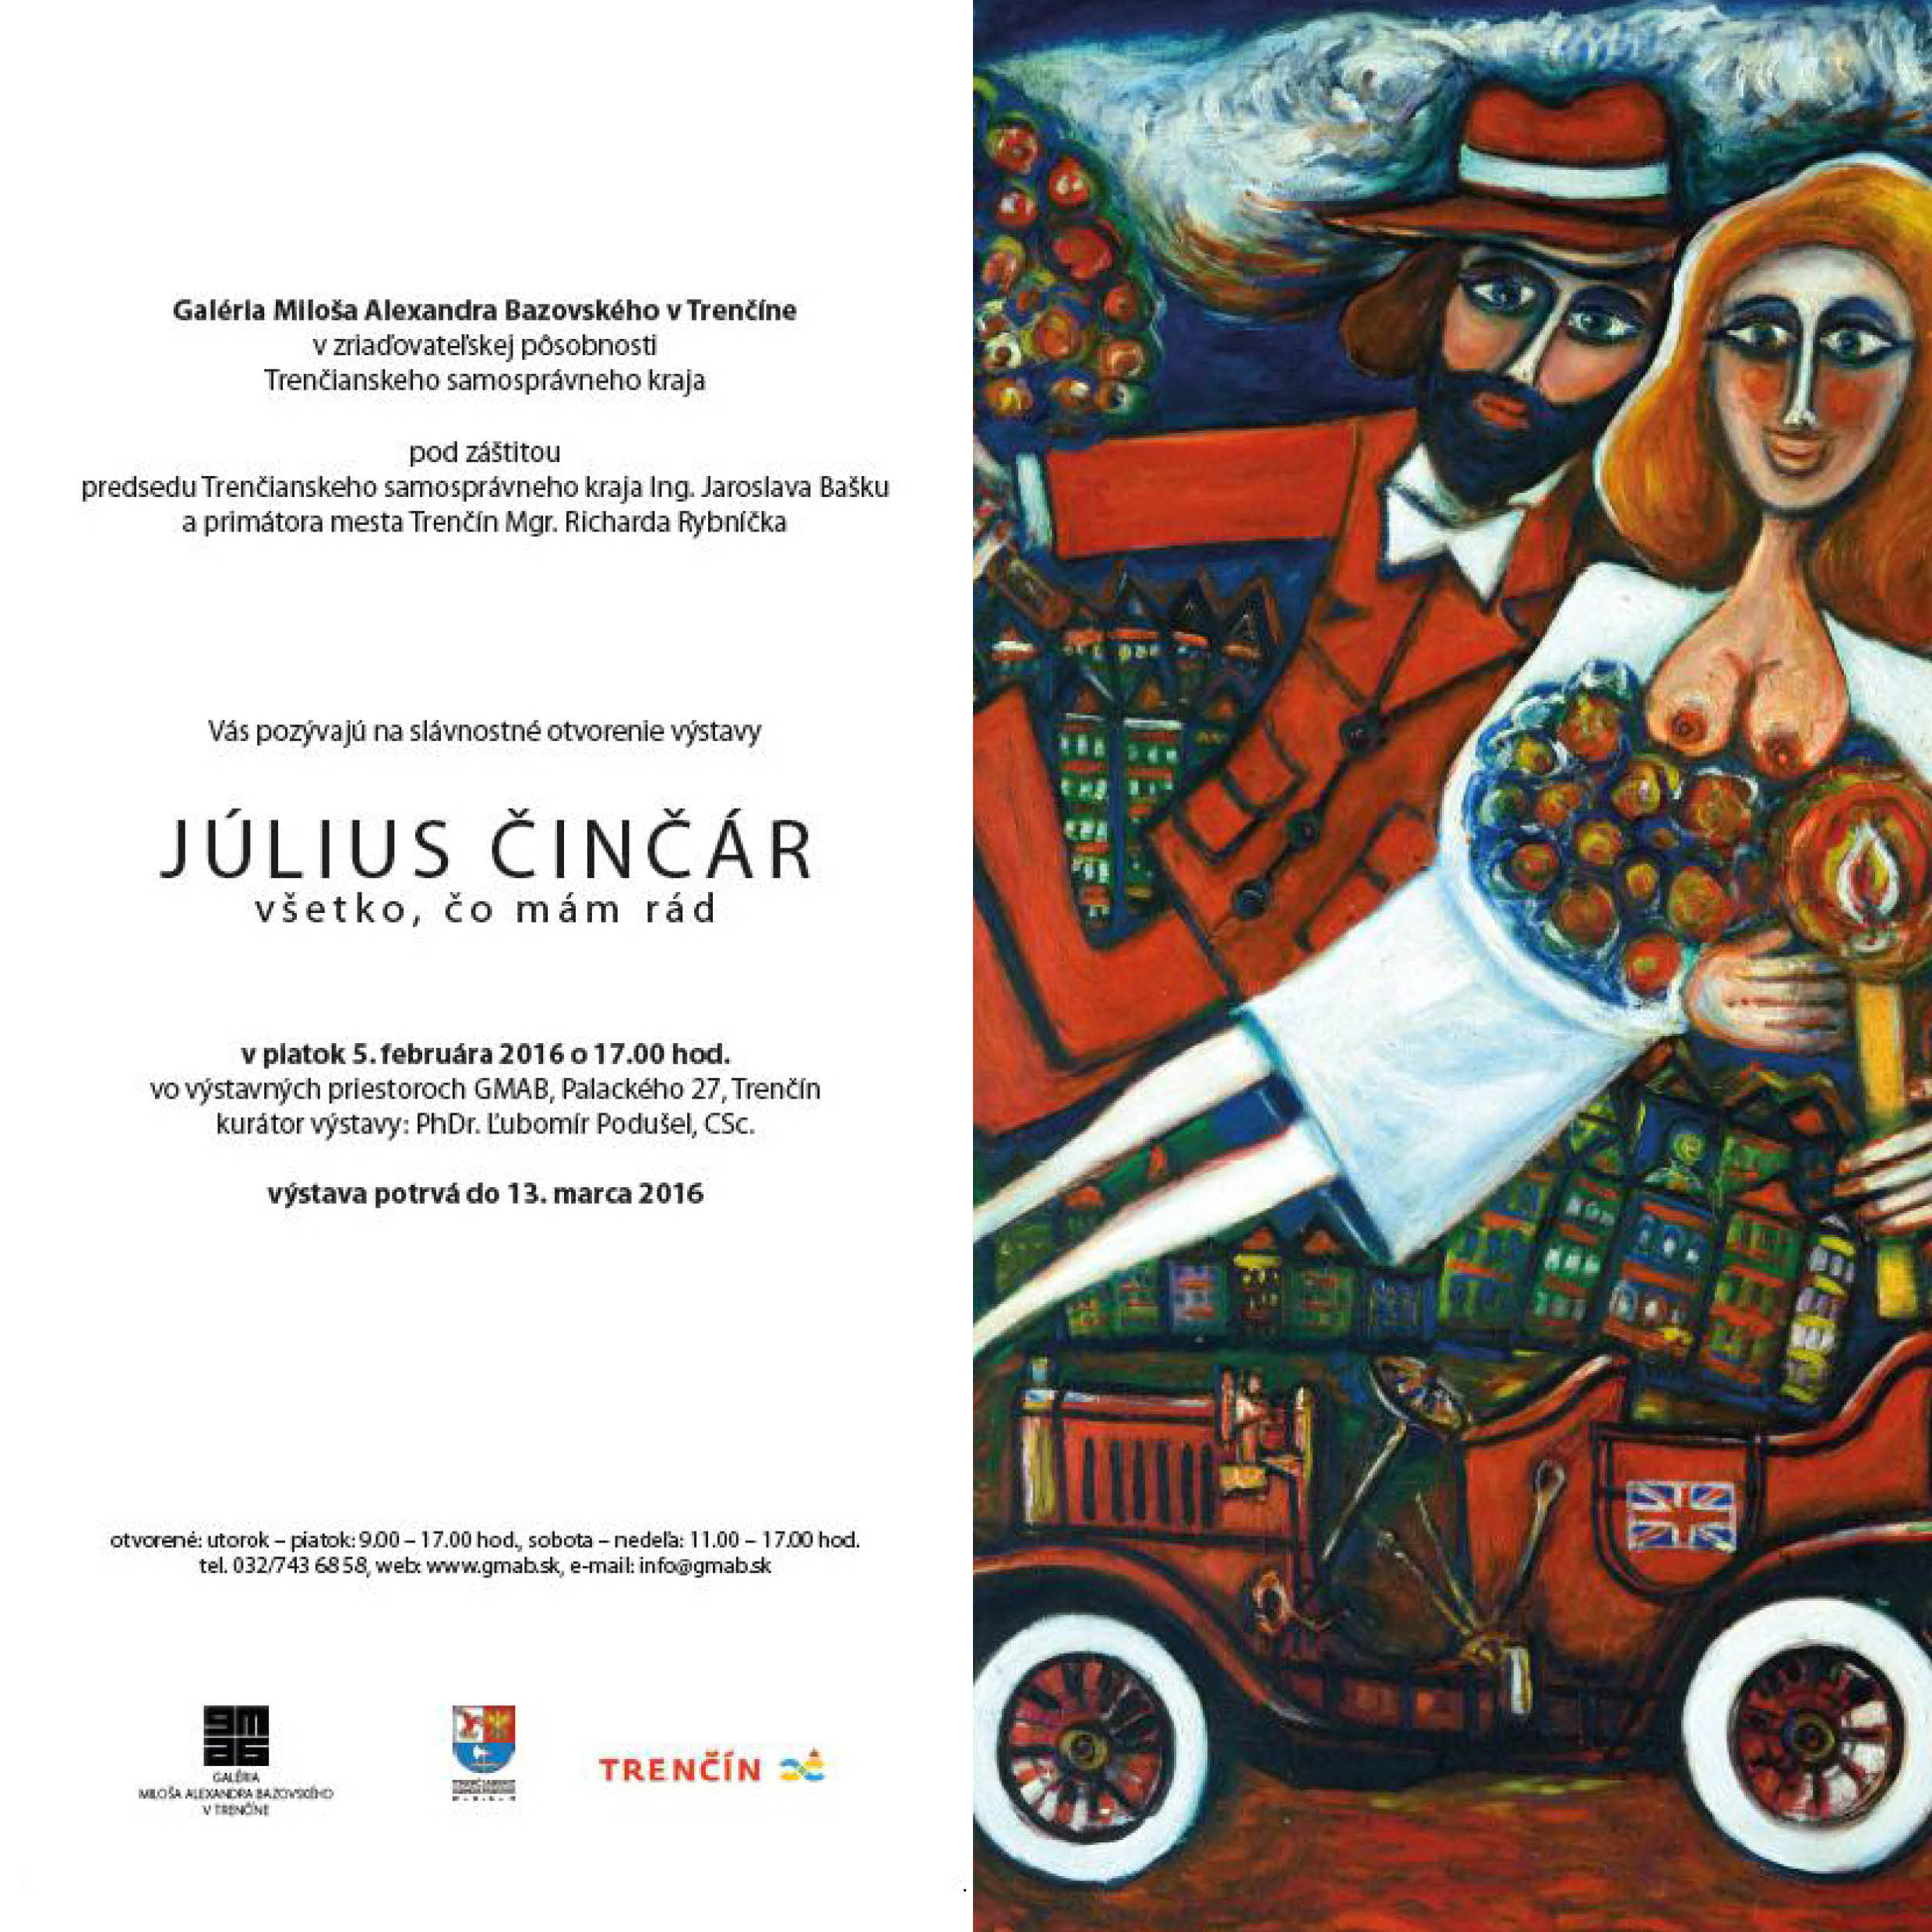 Július Činčár - výstava